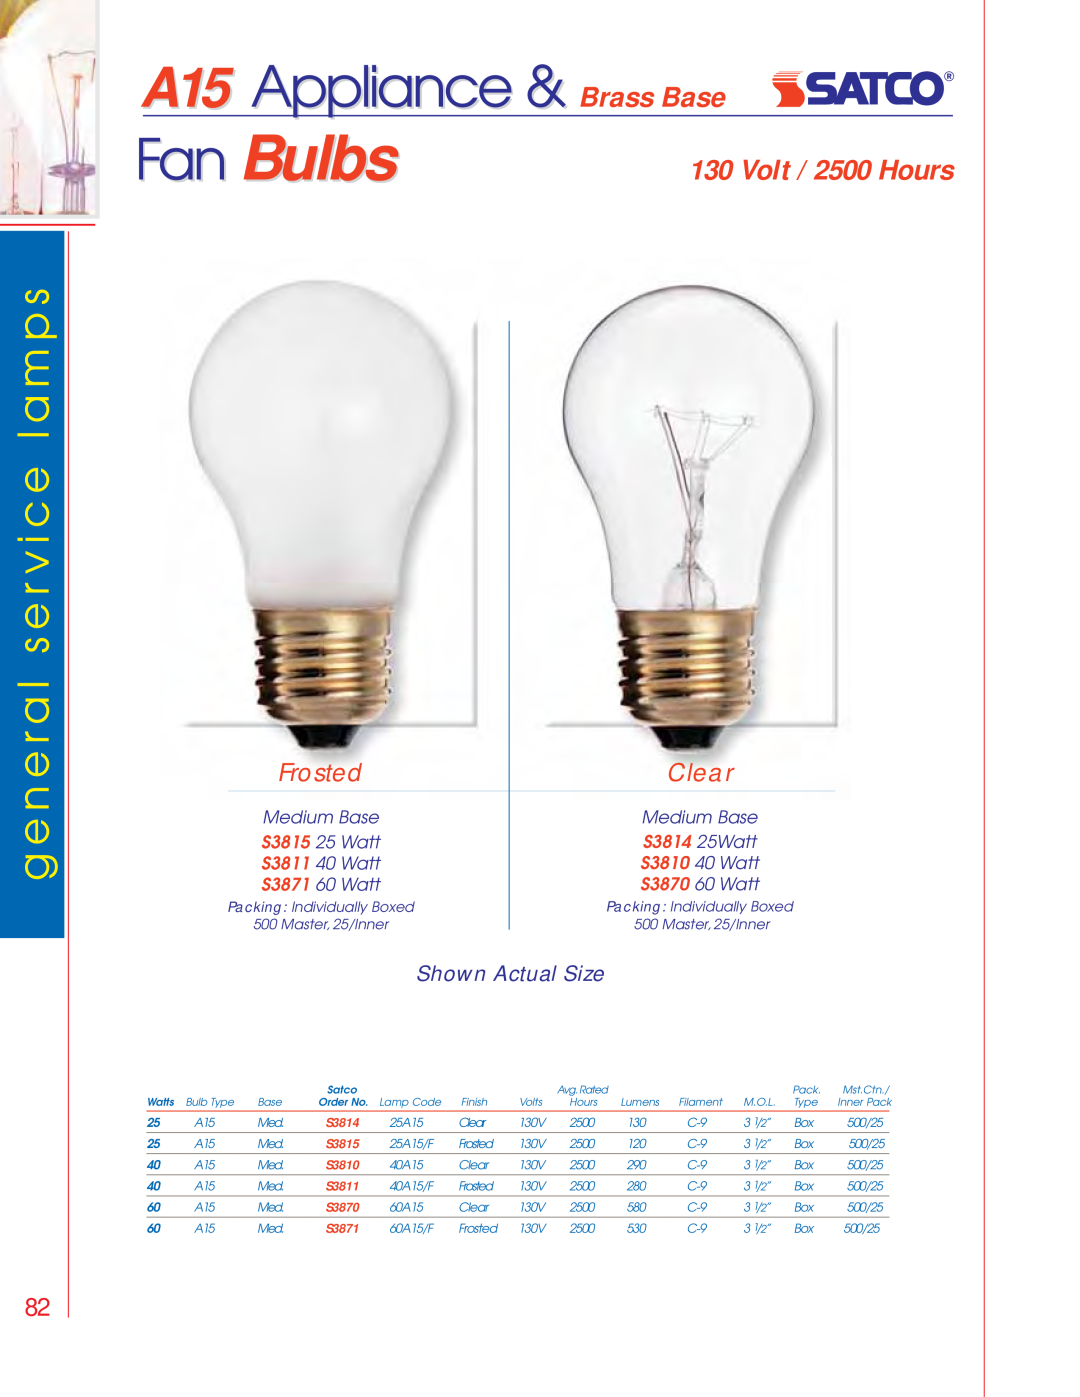 Satco Products S3692 Fan Bulbs, A15 Appliance & Brass Base, Volt / 2500 Hours, S3814 25Watt, Frosted, Clear, S3815, S3810 